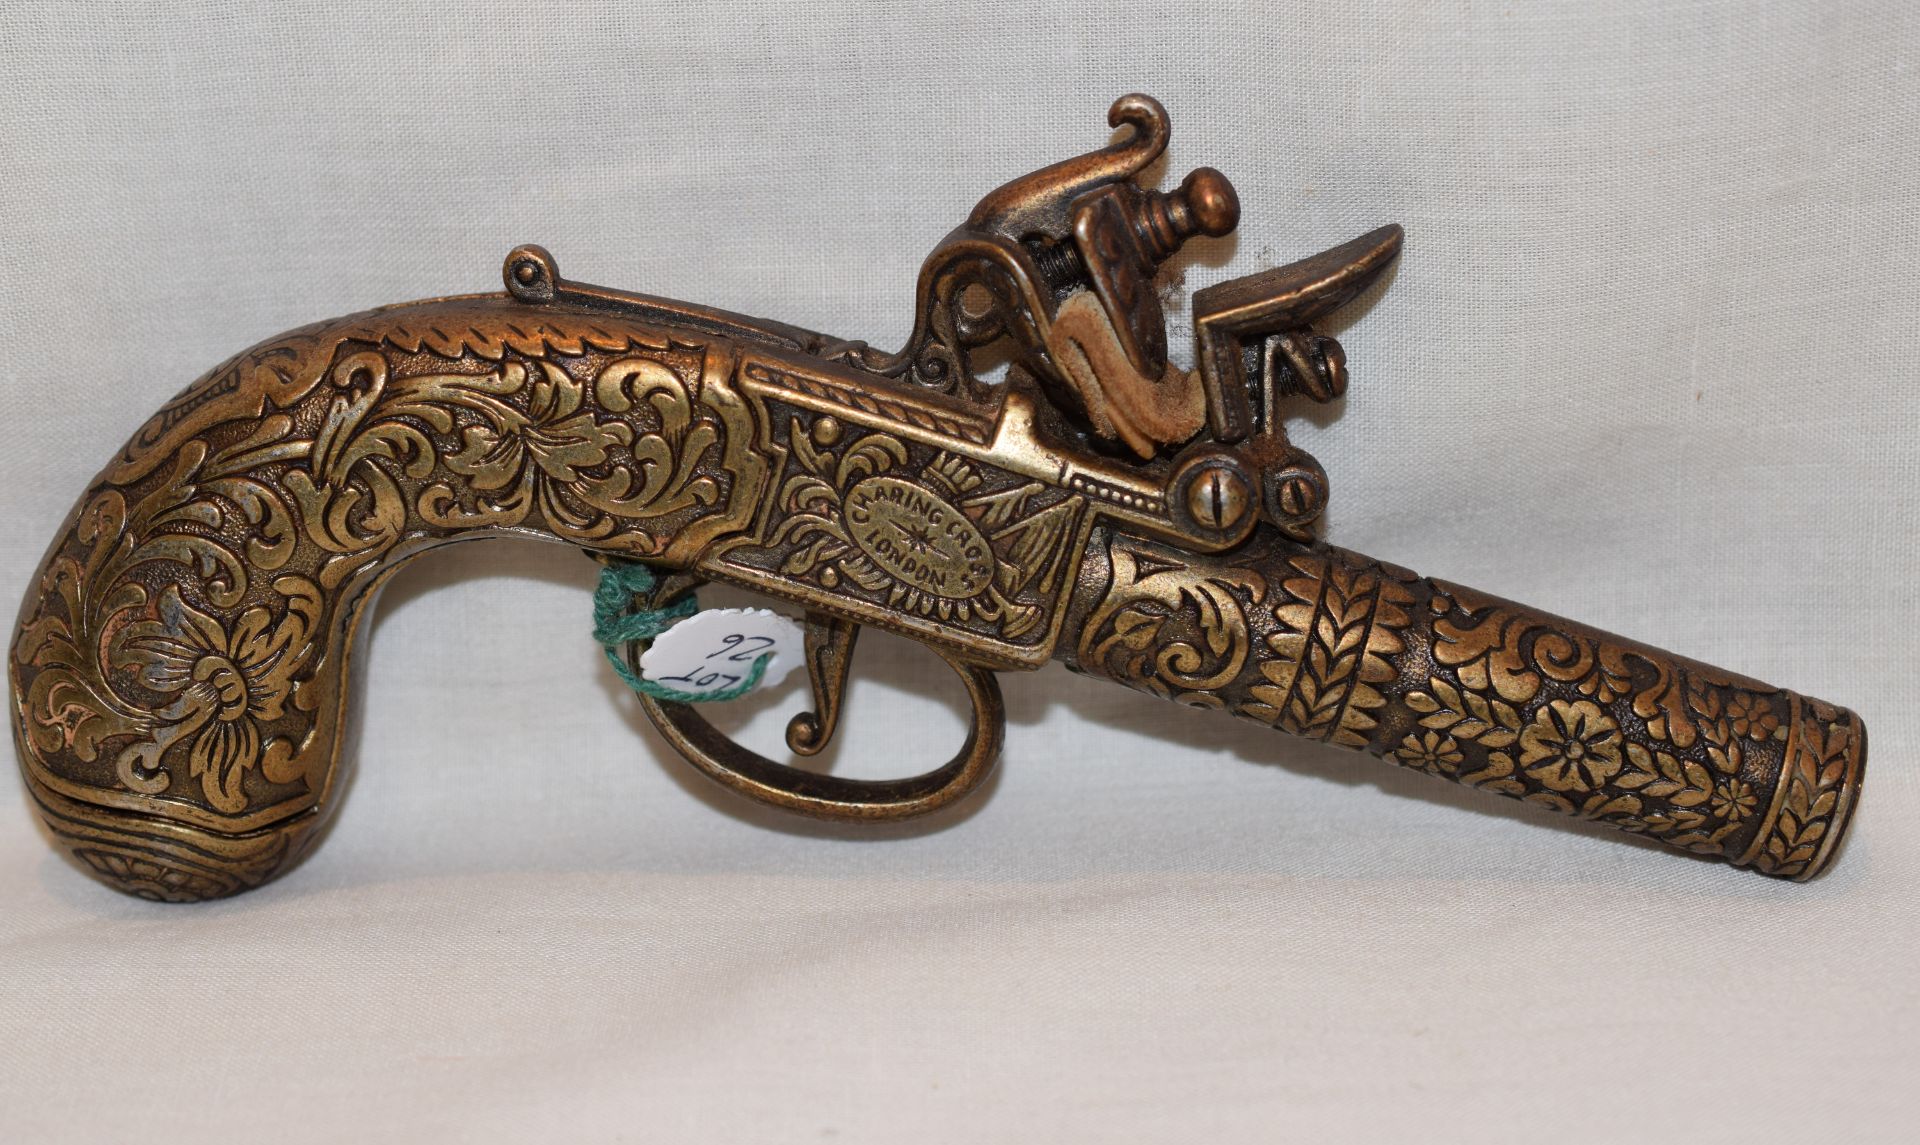 Highly Decorated Brass Style Flintlock Pistol Replica